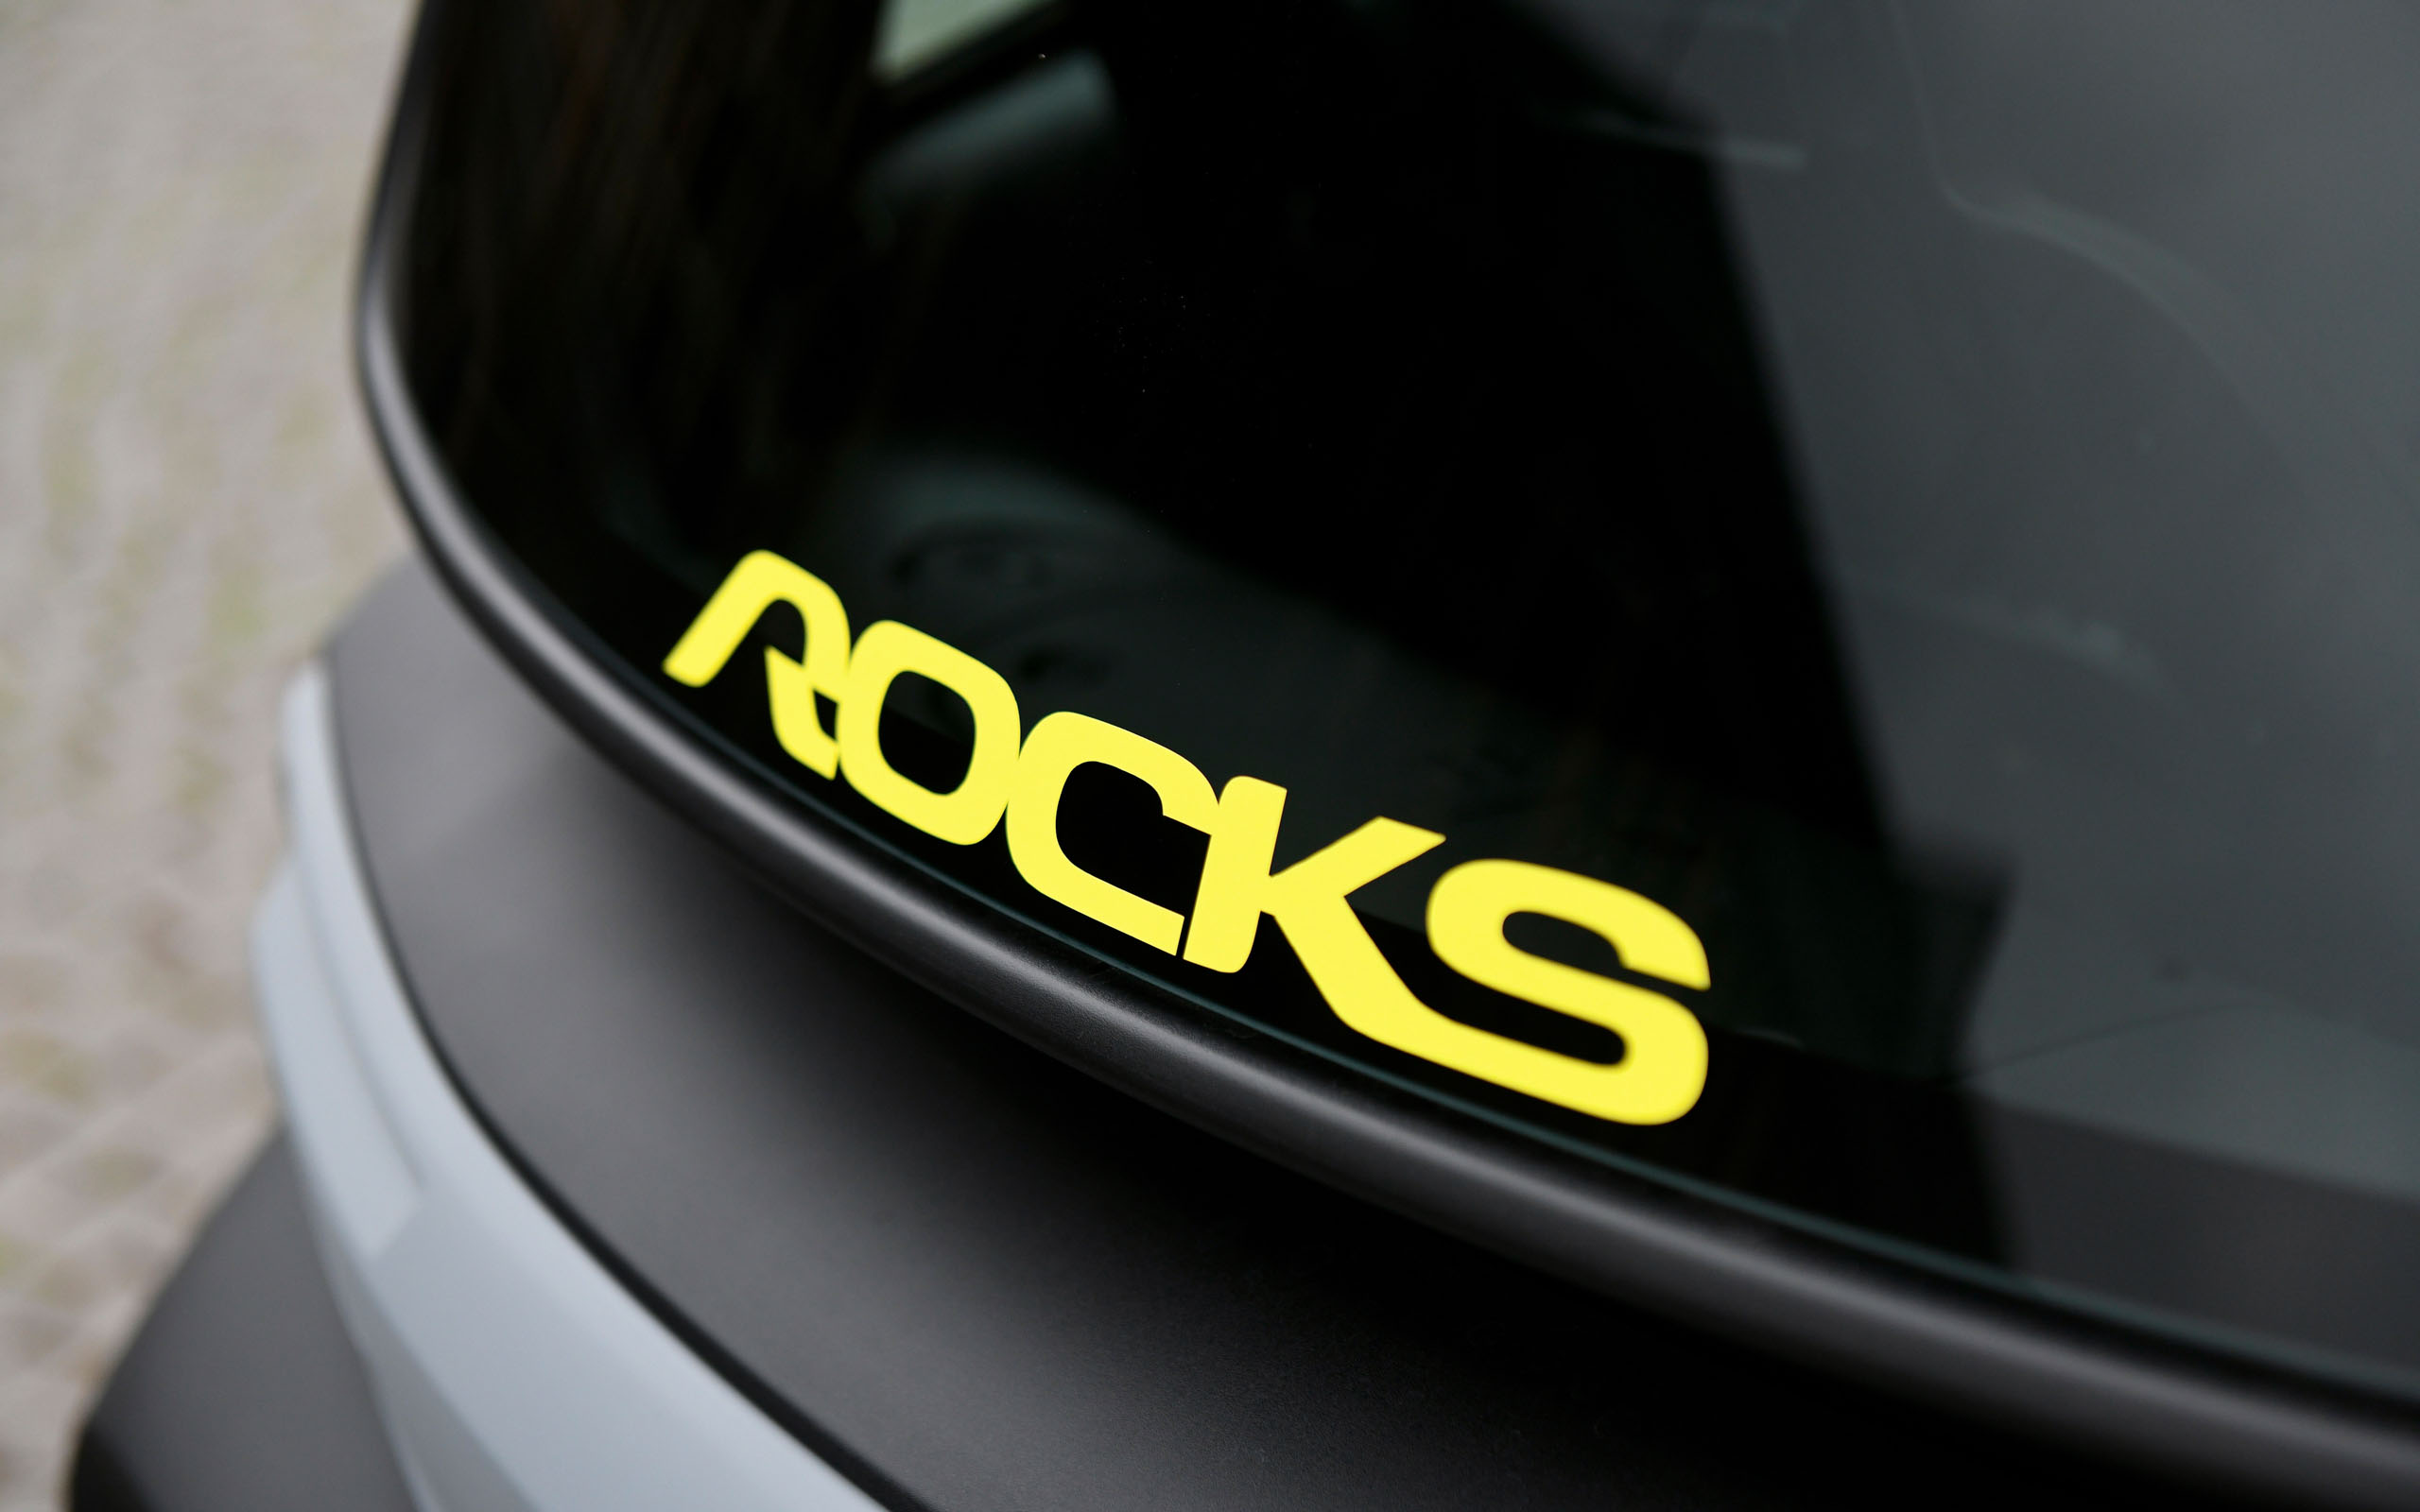 2022 Opel Rocks-E BVB 09 Edition | Fanaticar Magazin